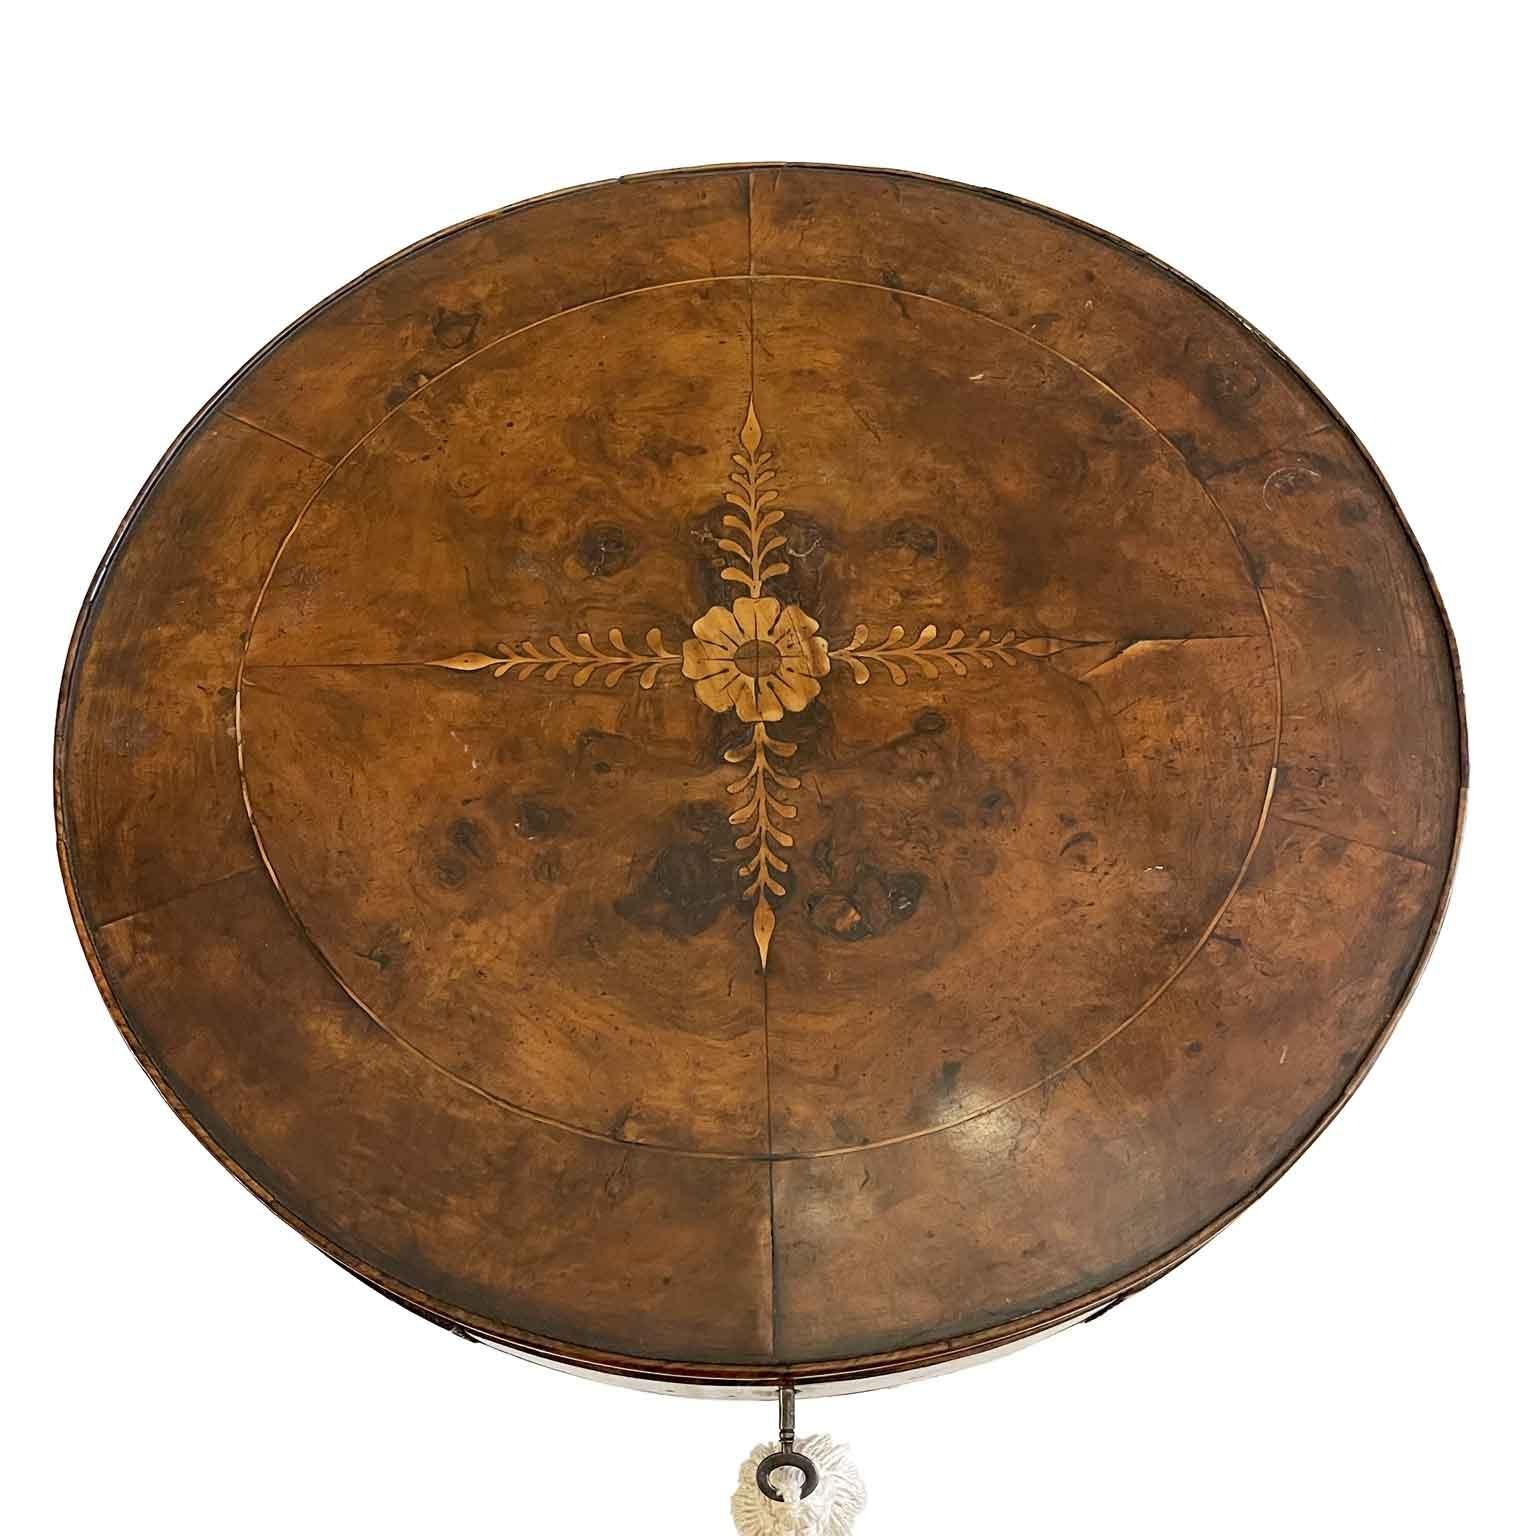 Ebonized Inlaid Circular Coffee Table with Drawer Italian Empire Era 1800s For Sale